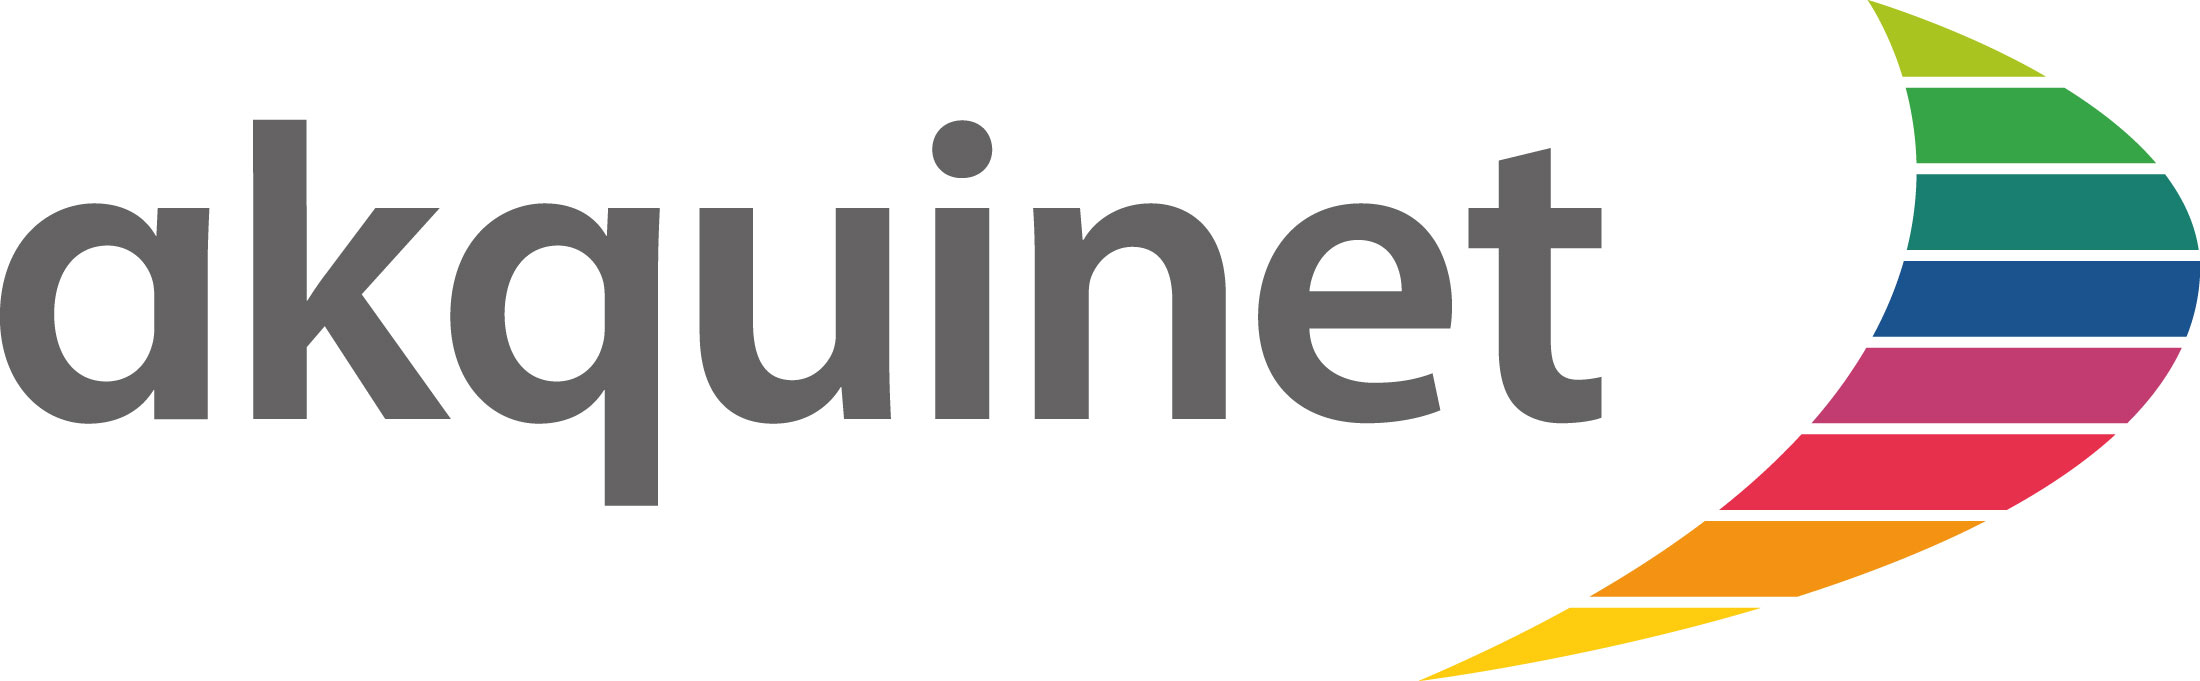 akquinet - logo - 1